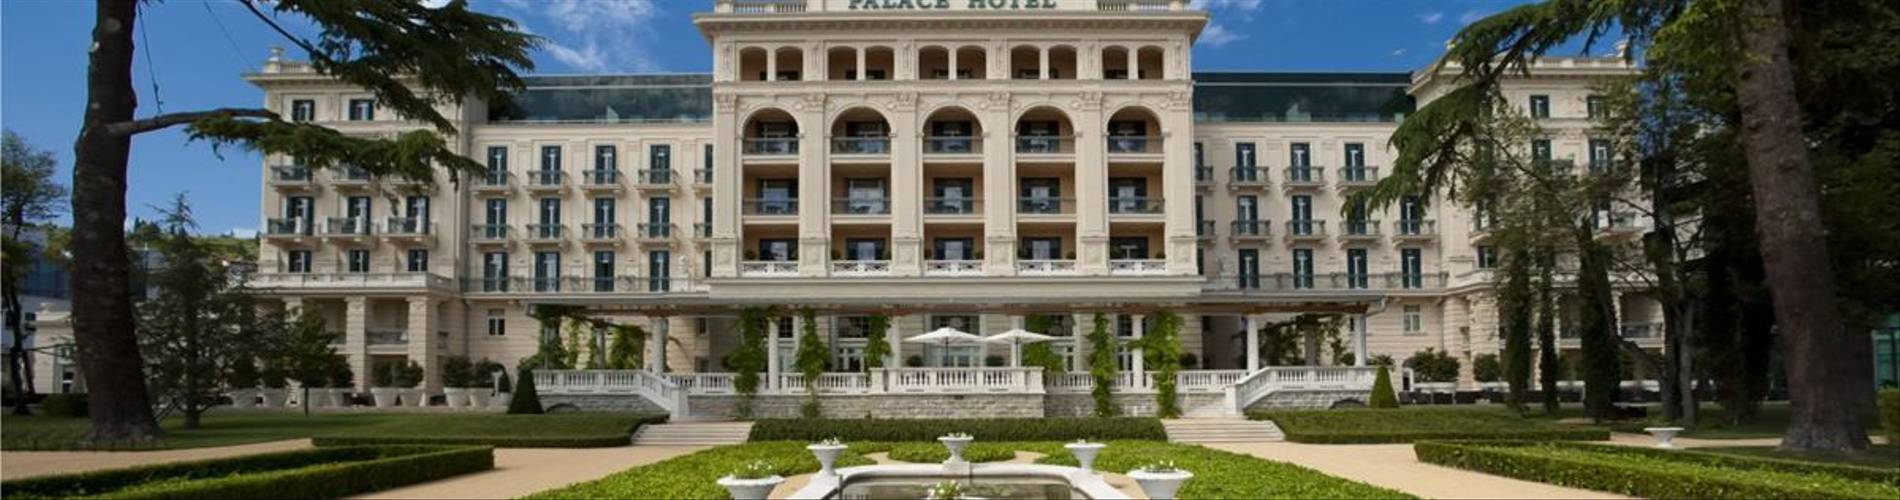 slider_hotel-kempinski-palace-portoroz-kempinski-palace-portoroz1.jpg